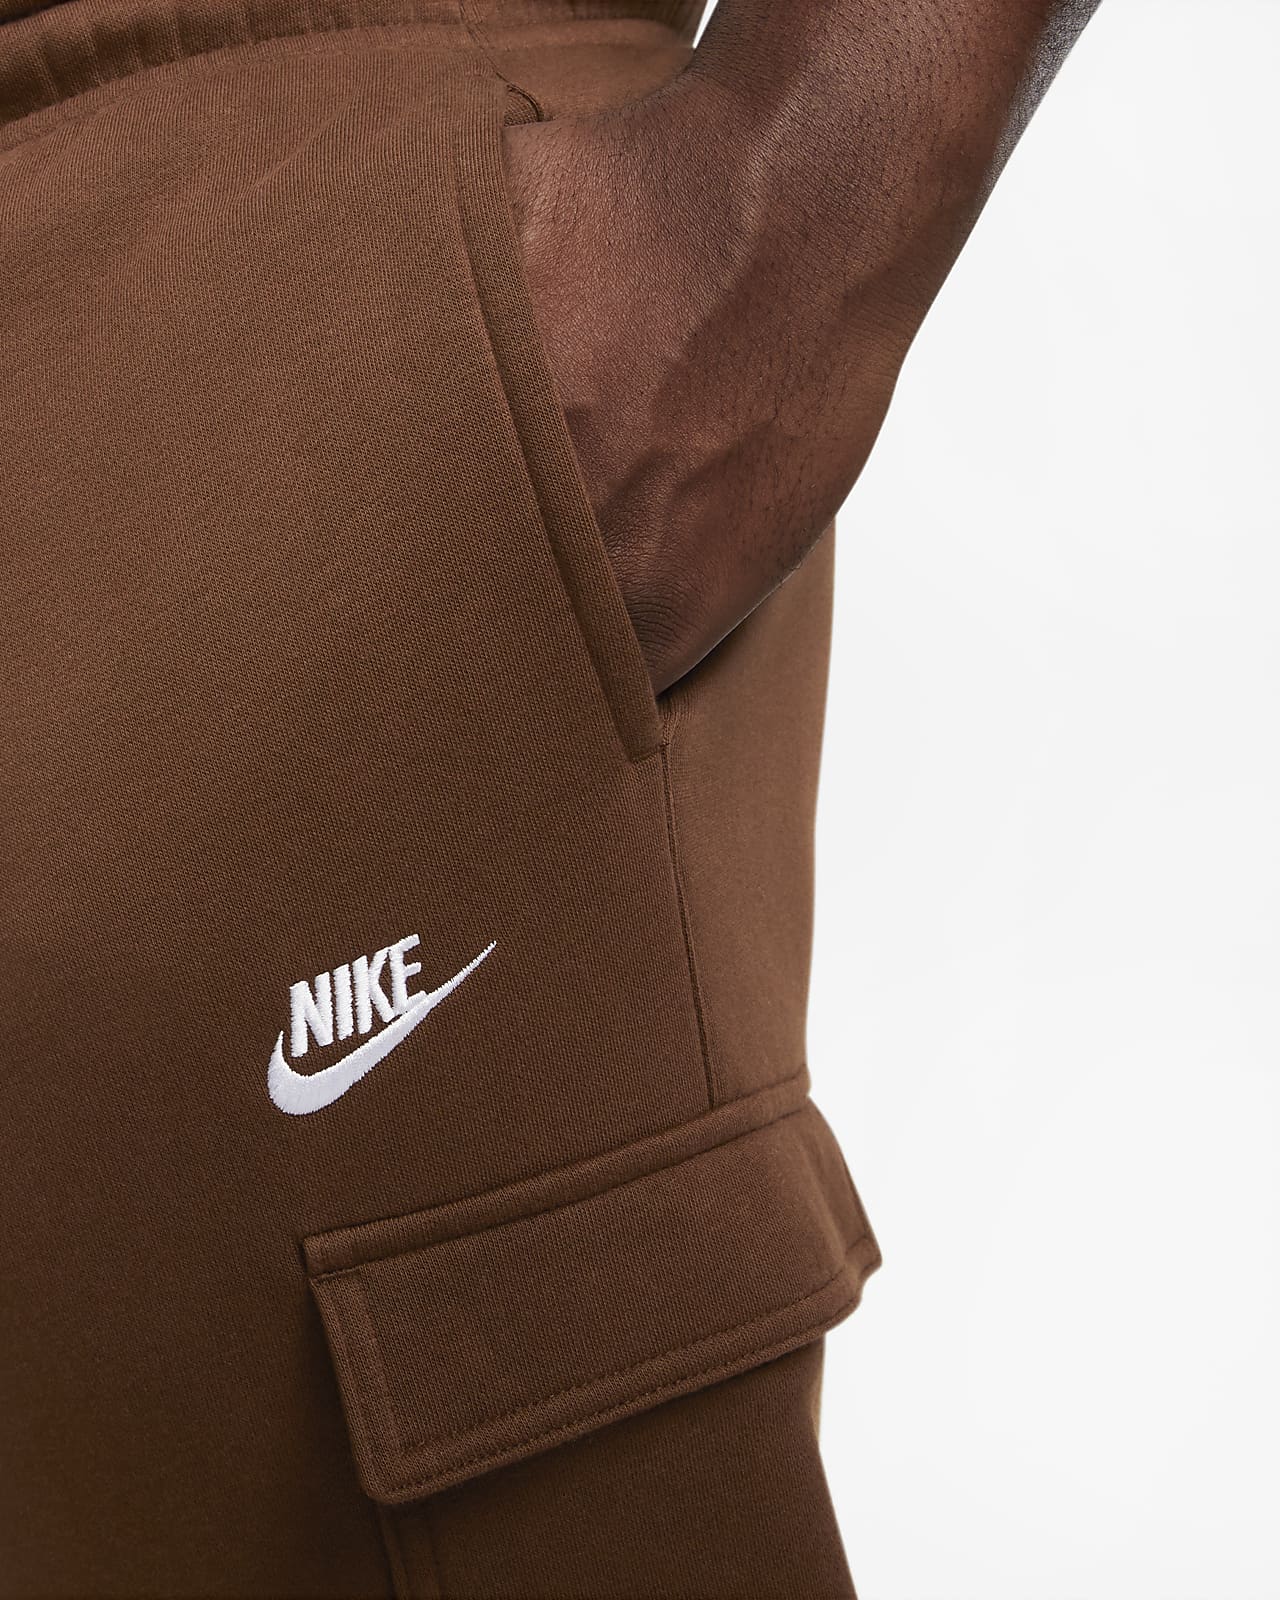 Nike Sportswear Club Fleece Cargo Pants Charcoal Heather/Anthracite/White  Men's - US